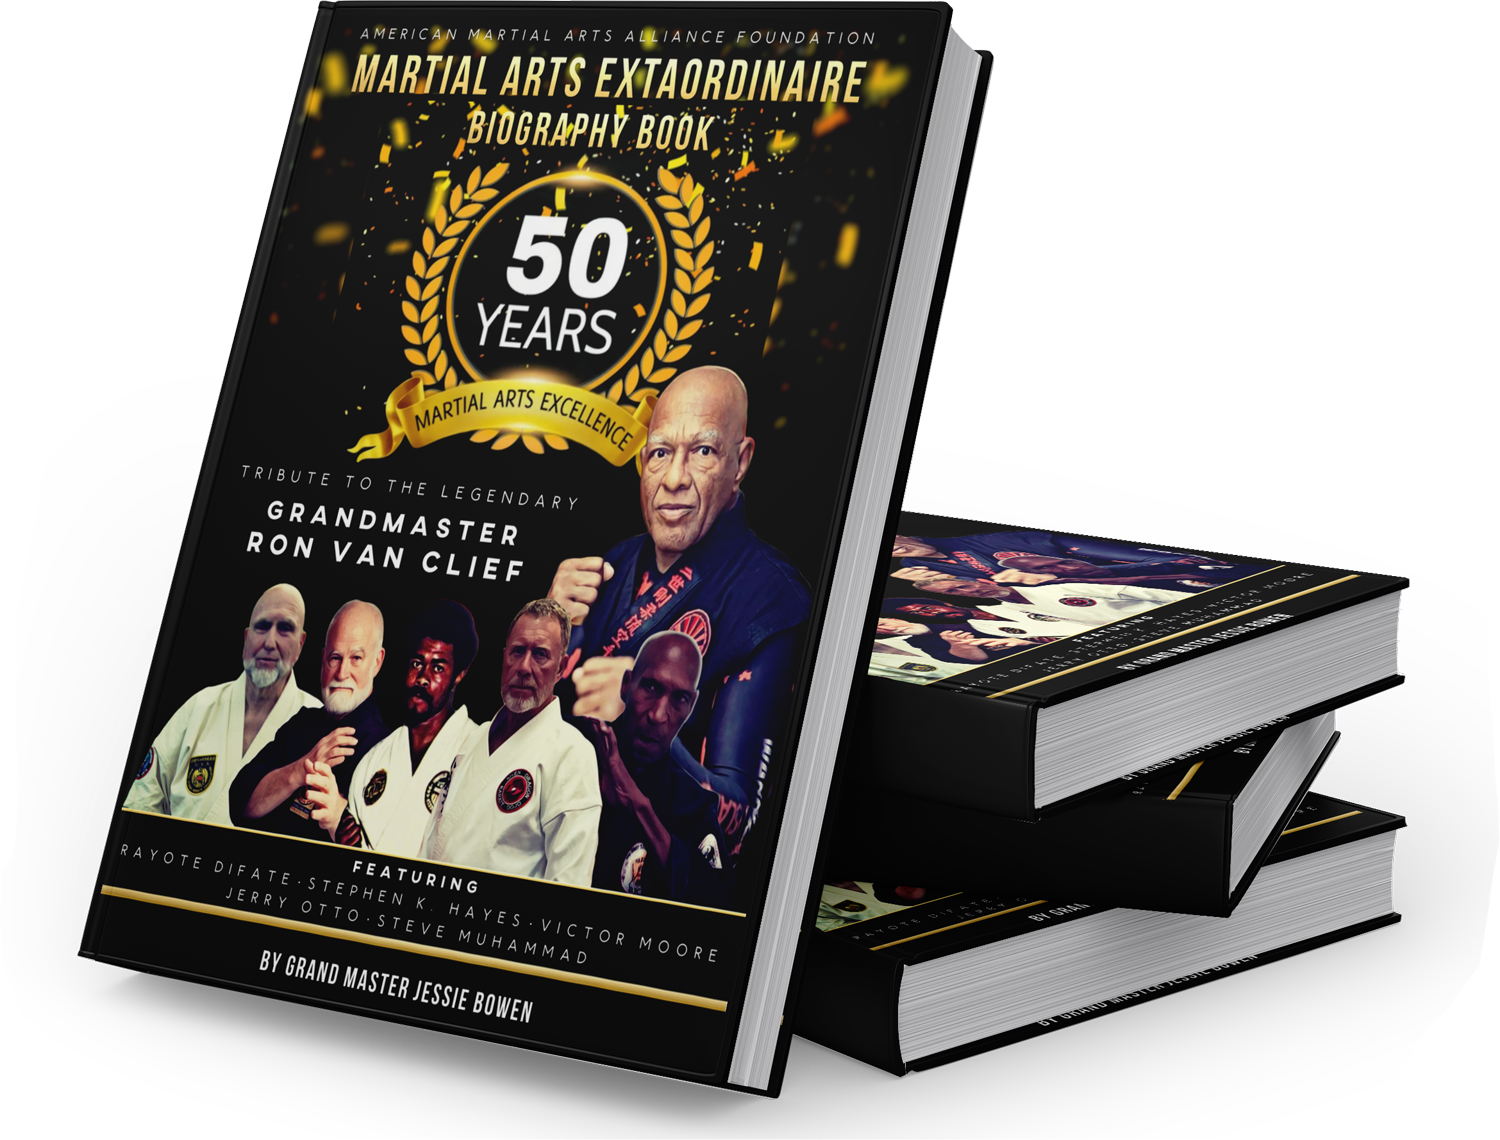 Limited Edition Martial Arts Extraordinaire Biography Book Signed Copy by Grandmaster Ron Van Clief